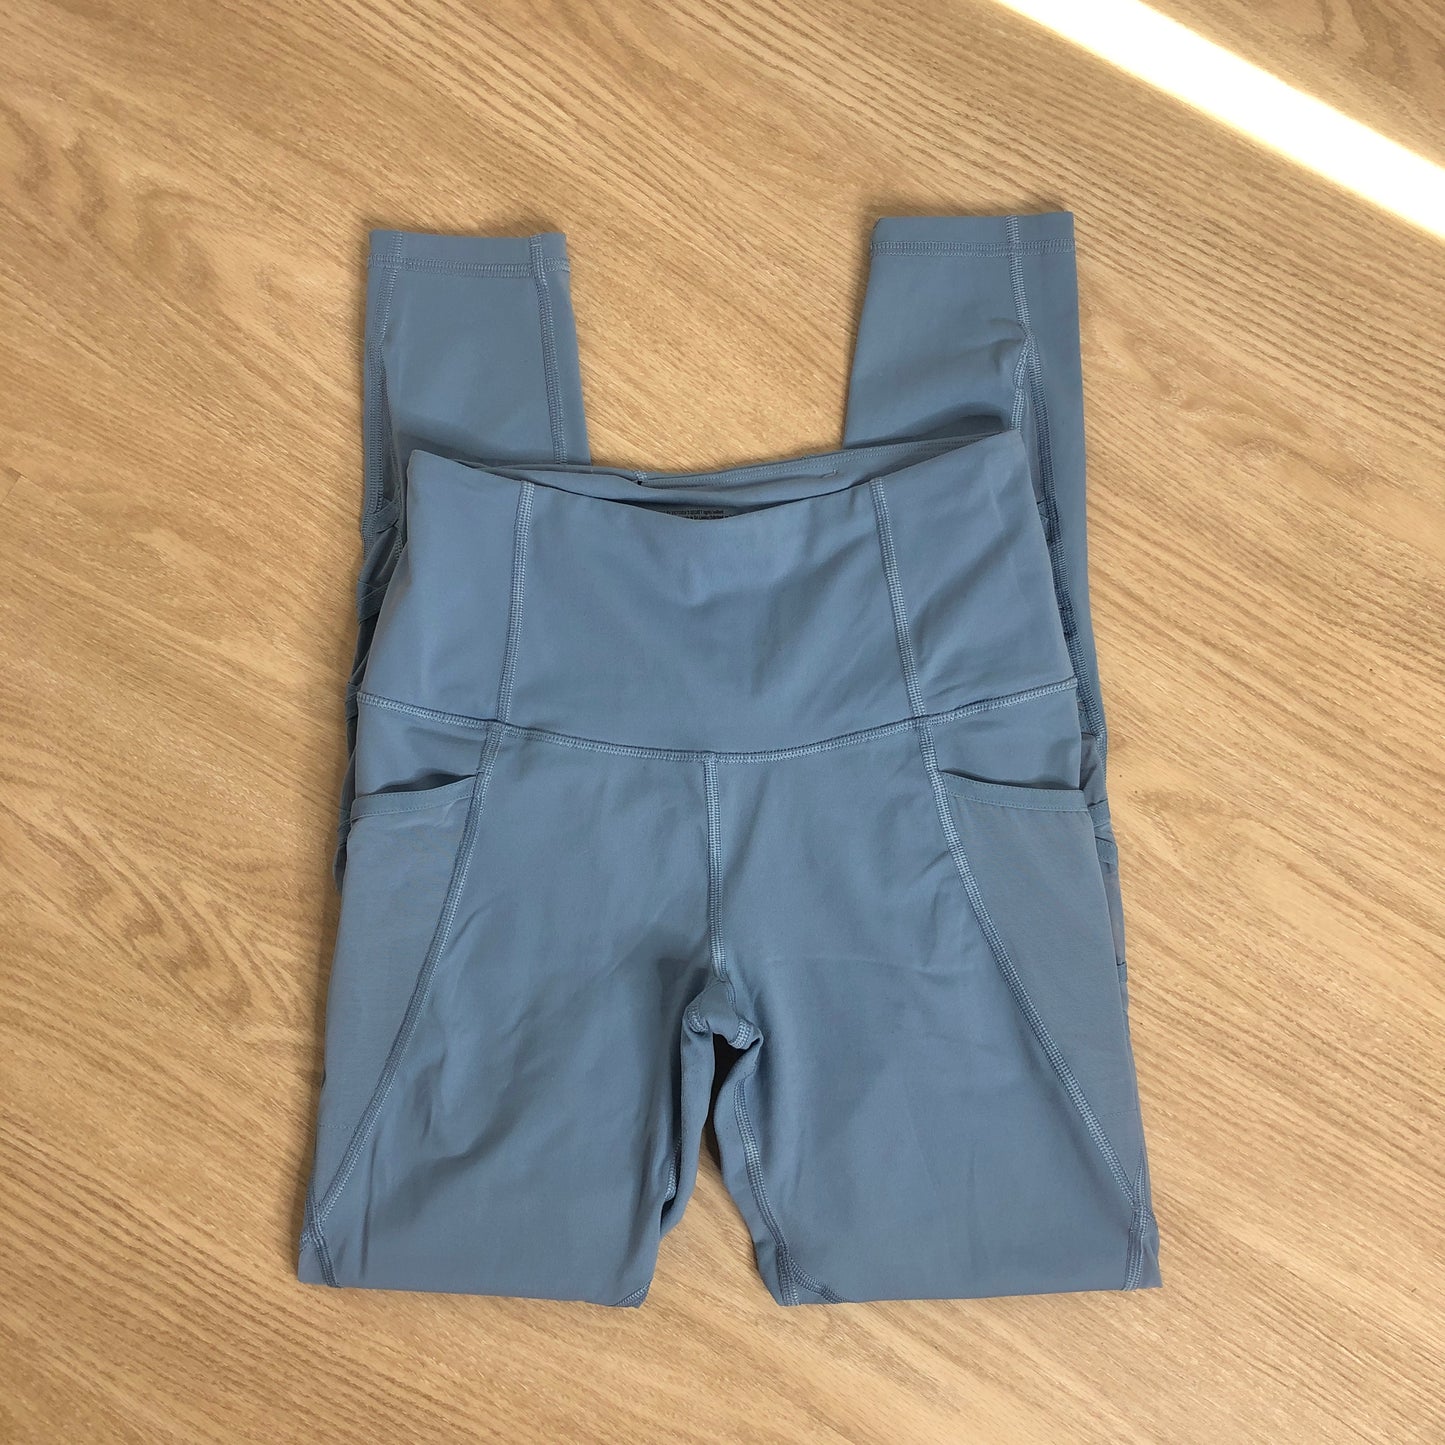 Victoria Sport light blue mesh criss cross athletic workout leggings pockets